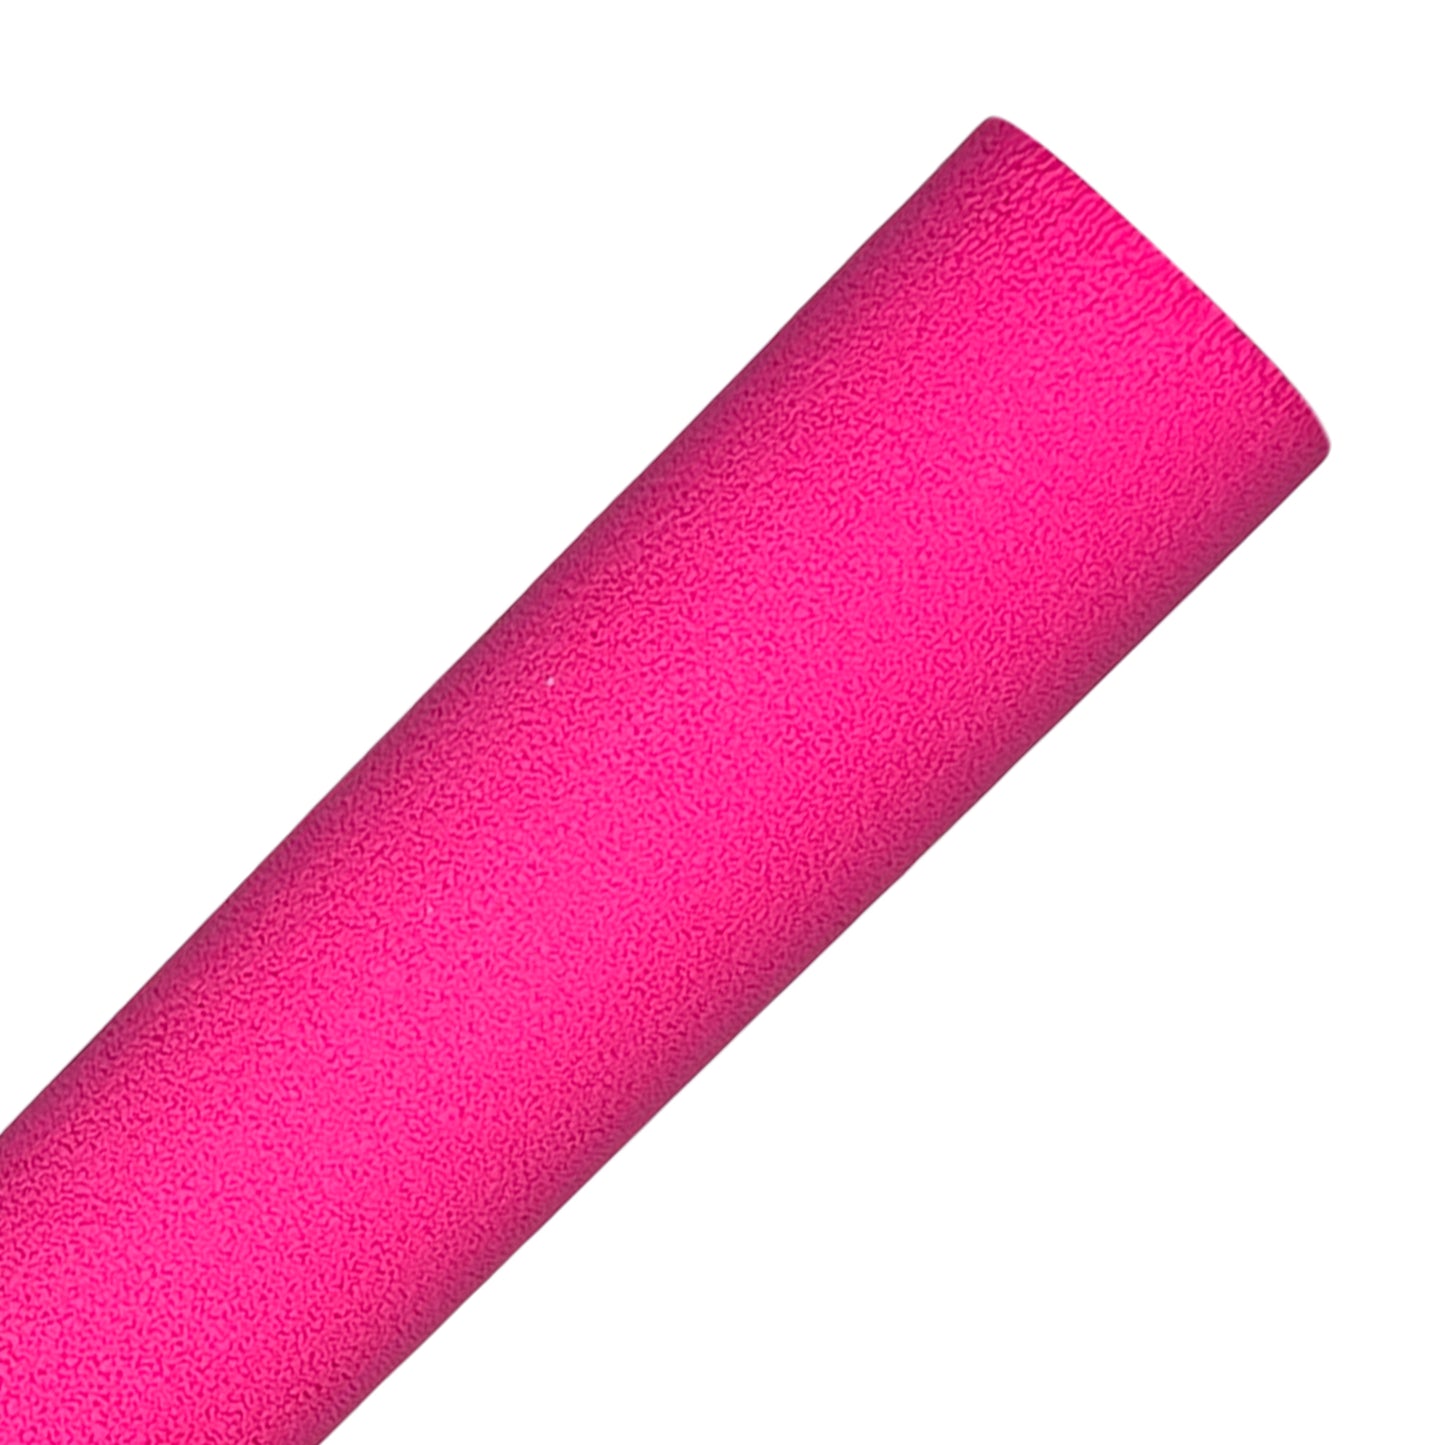 Neon Pink Puff Heat Transfer Vinyl Rolls By Craftables